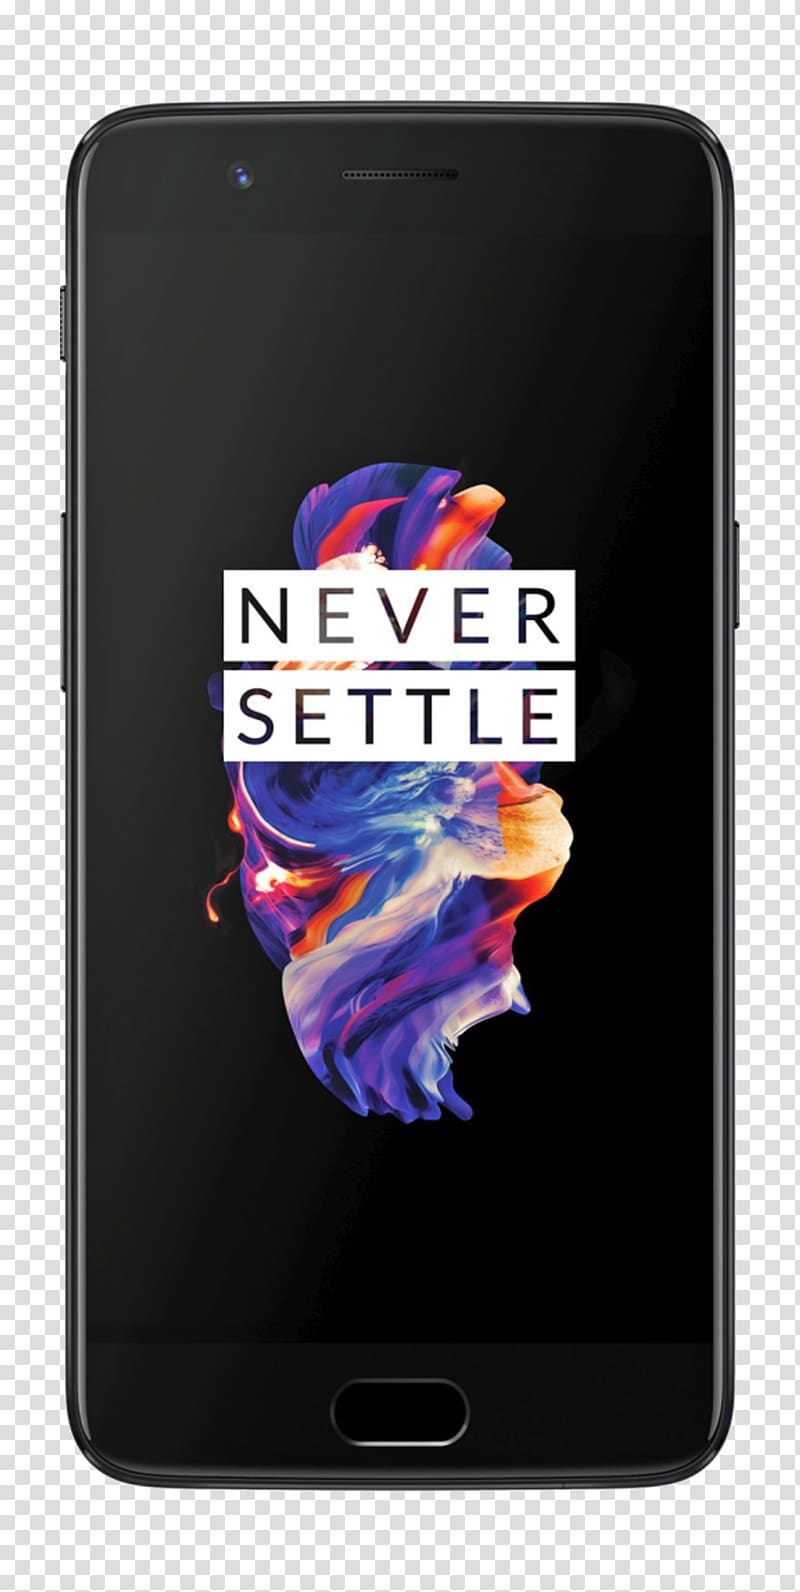 OnePlus 5T Dual SIM 4G 64GB Black Hardware/Electronic Smartphone 一加 OnePlus 5 International Version, 128 GB, Slate Gray, Unlocked, smartphone transparent background PNG clipart